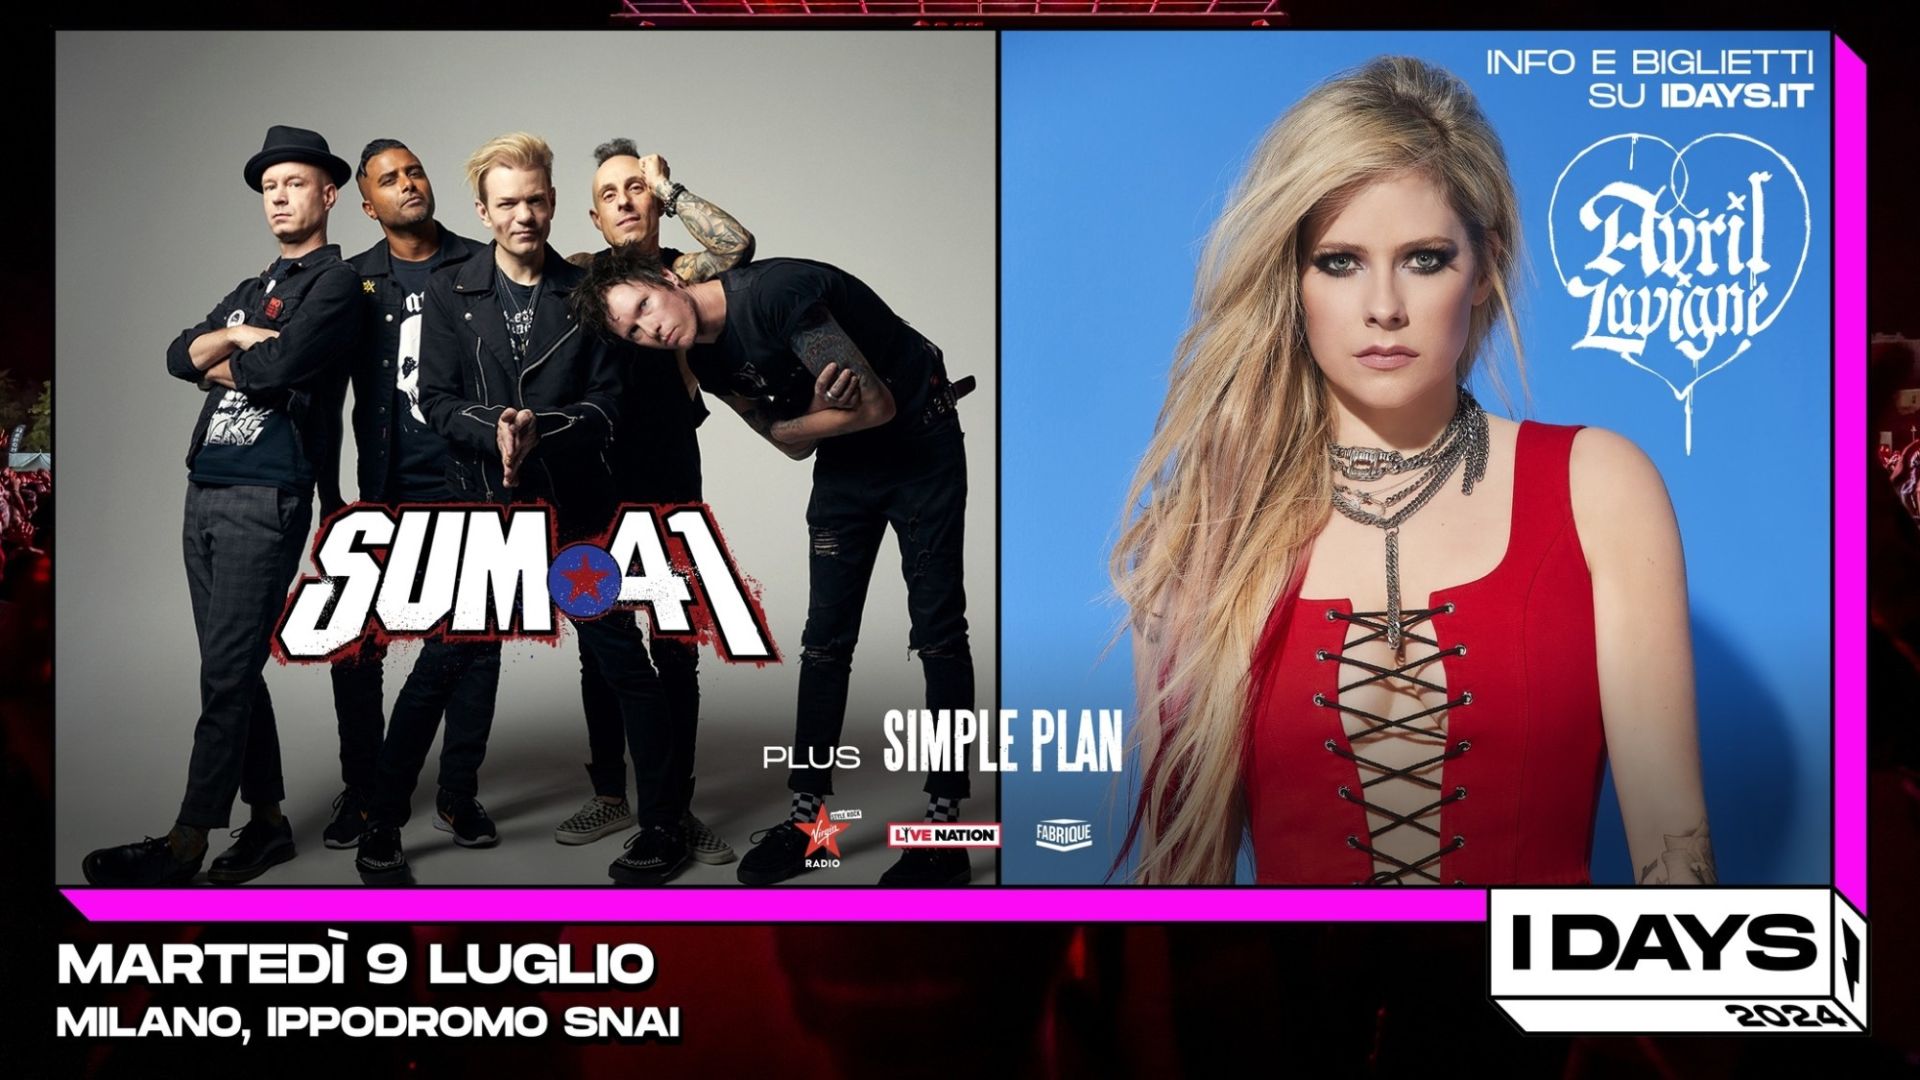 Sum 41 + Avril Lavigne - I-Days